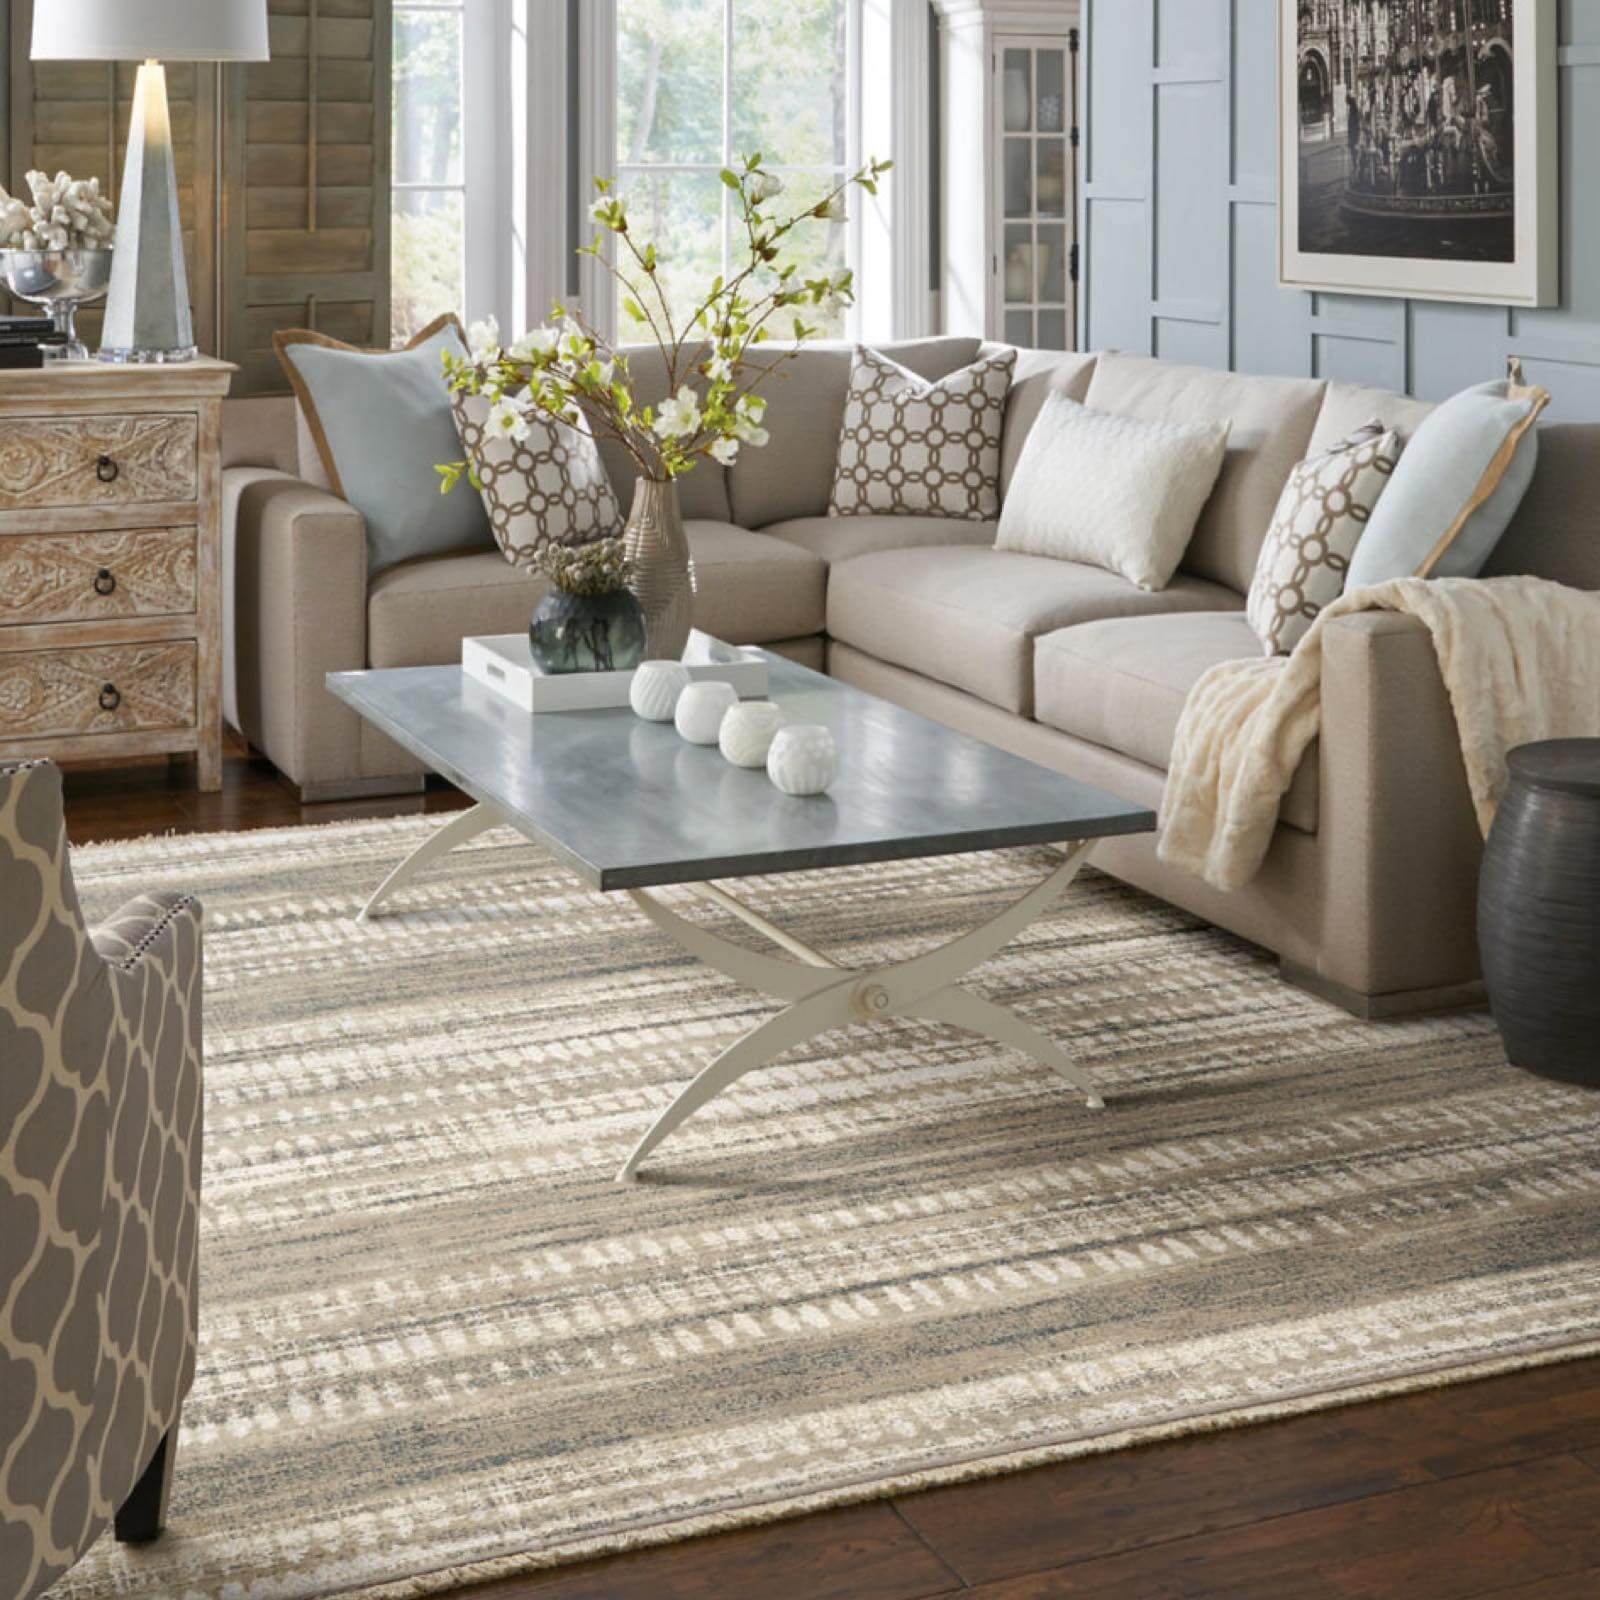 Area Rug in living room | Vic's Carpet & Flooring